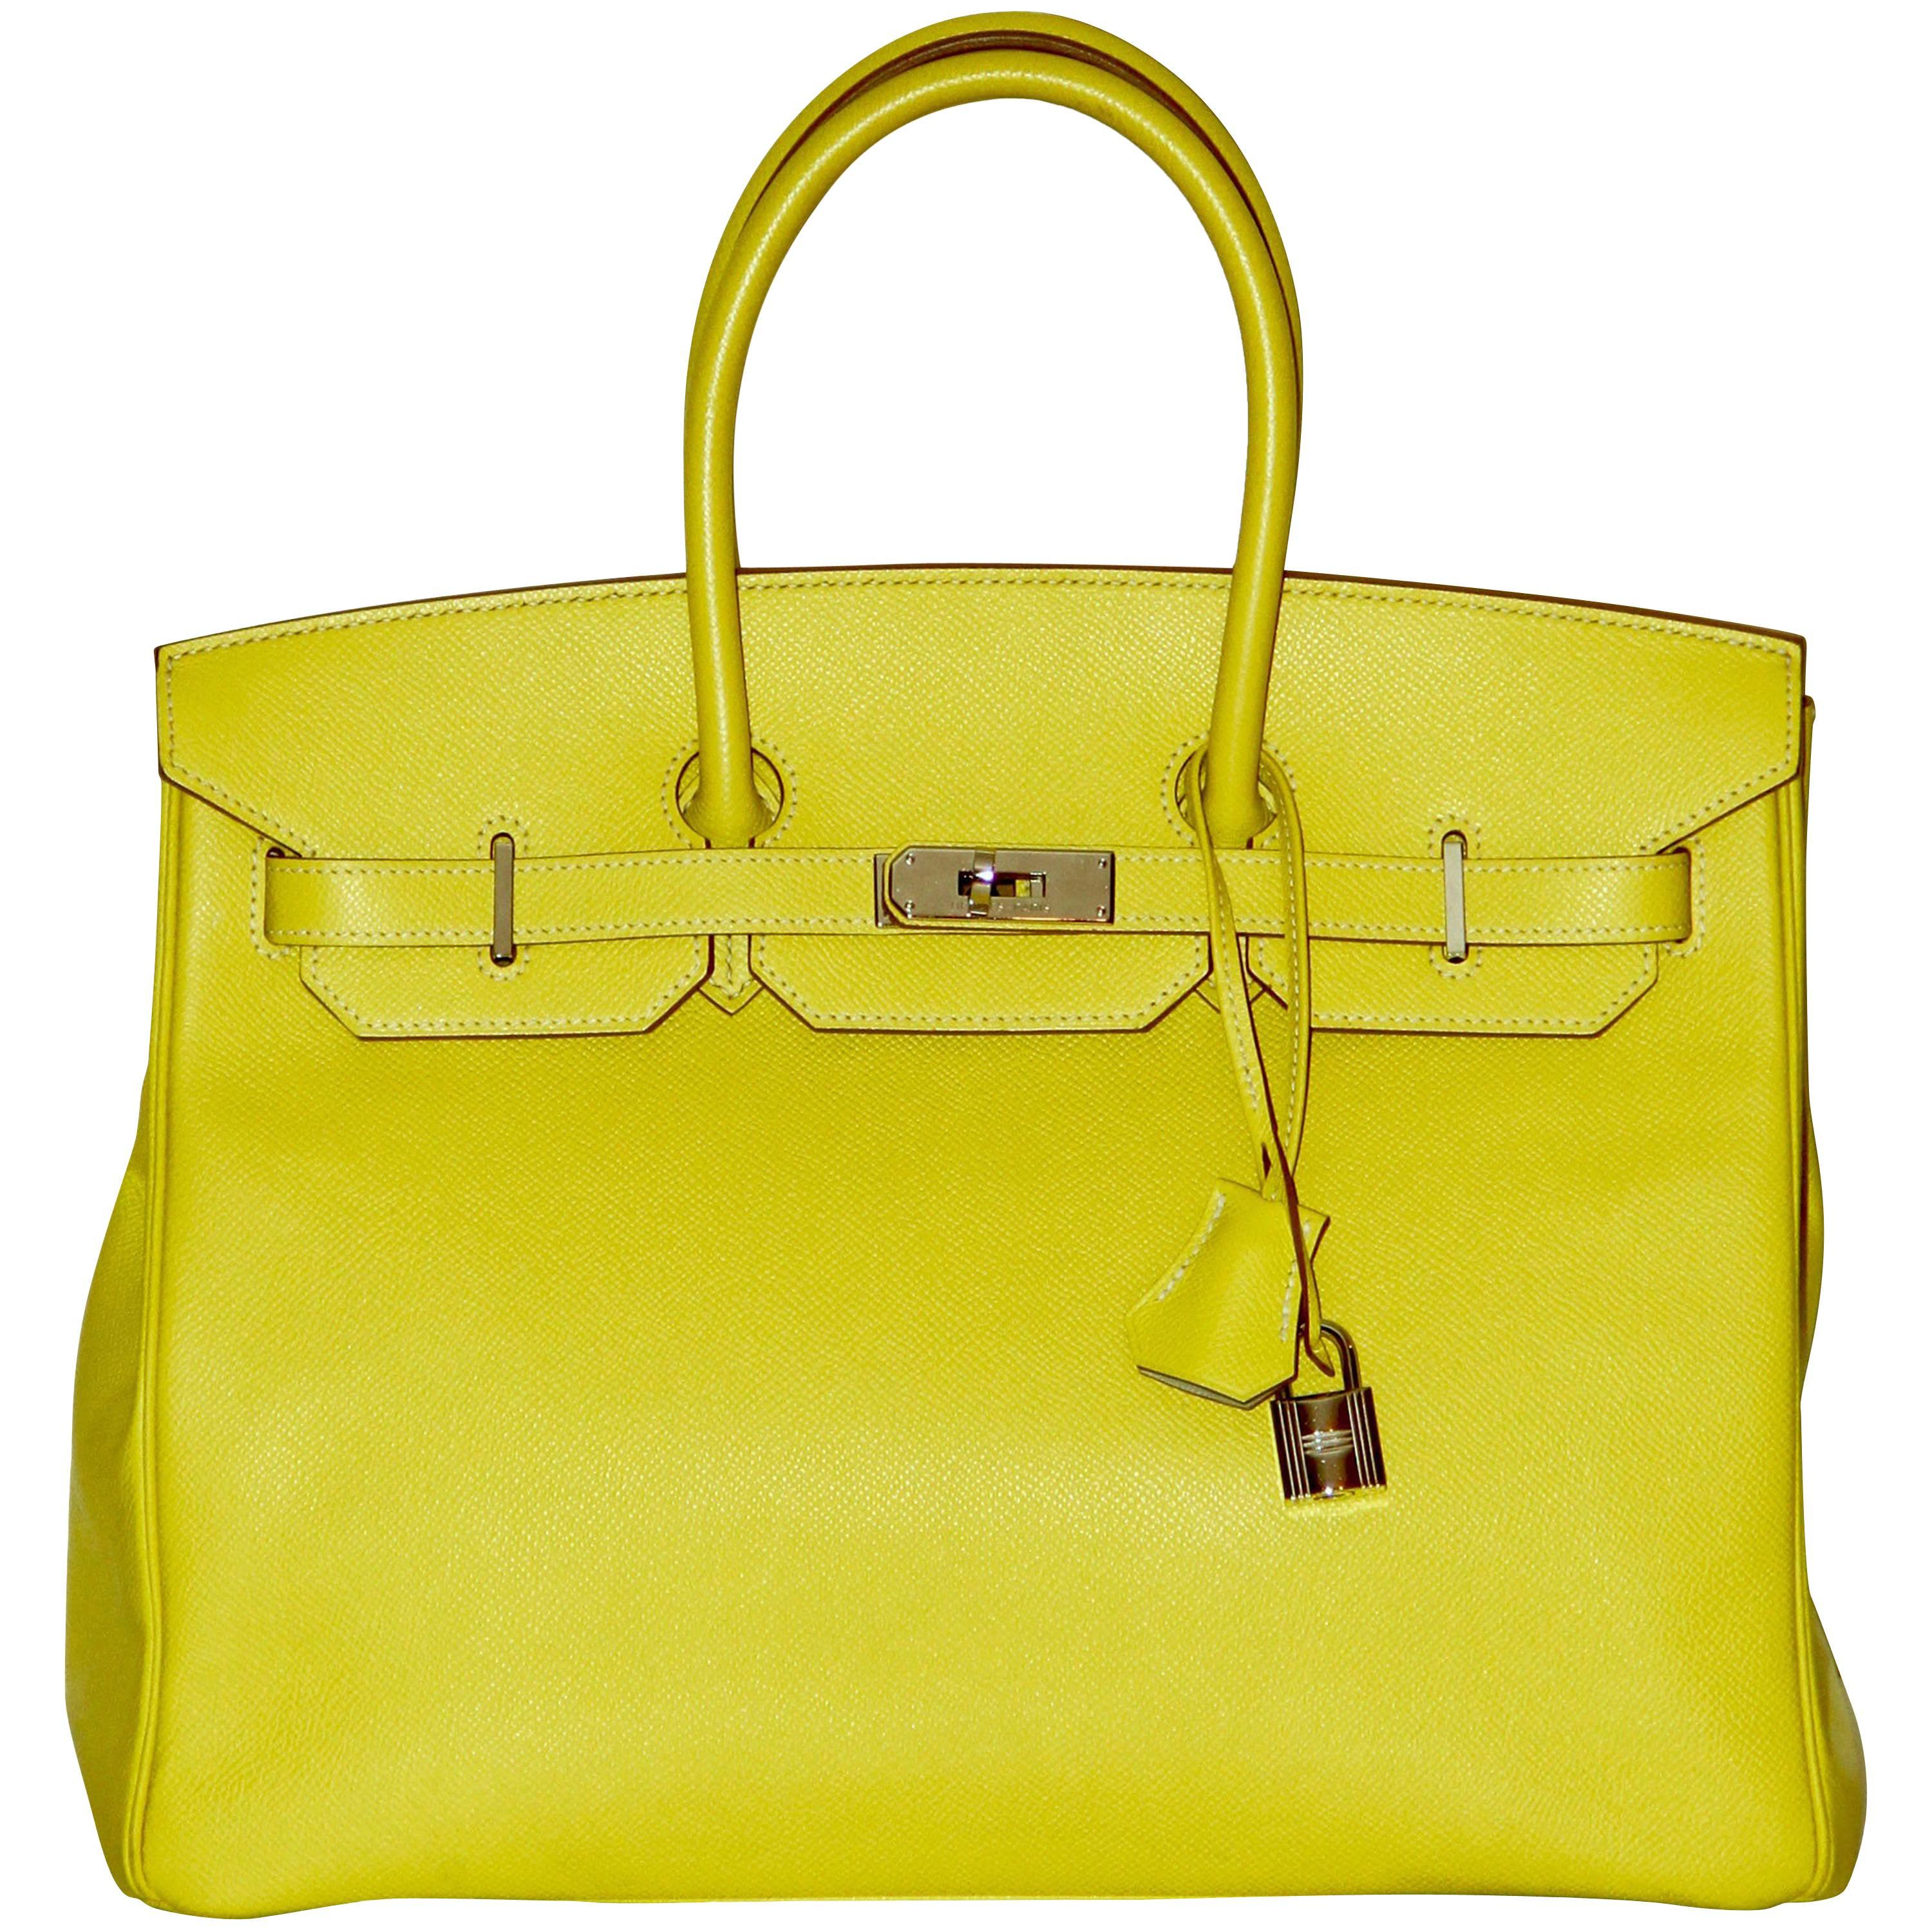 Hermes Birkin 35 Handbag Bicolor in Lime and Grey Epsom Leather